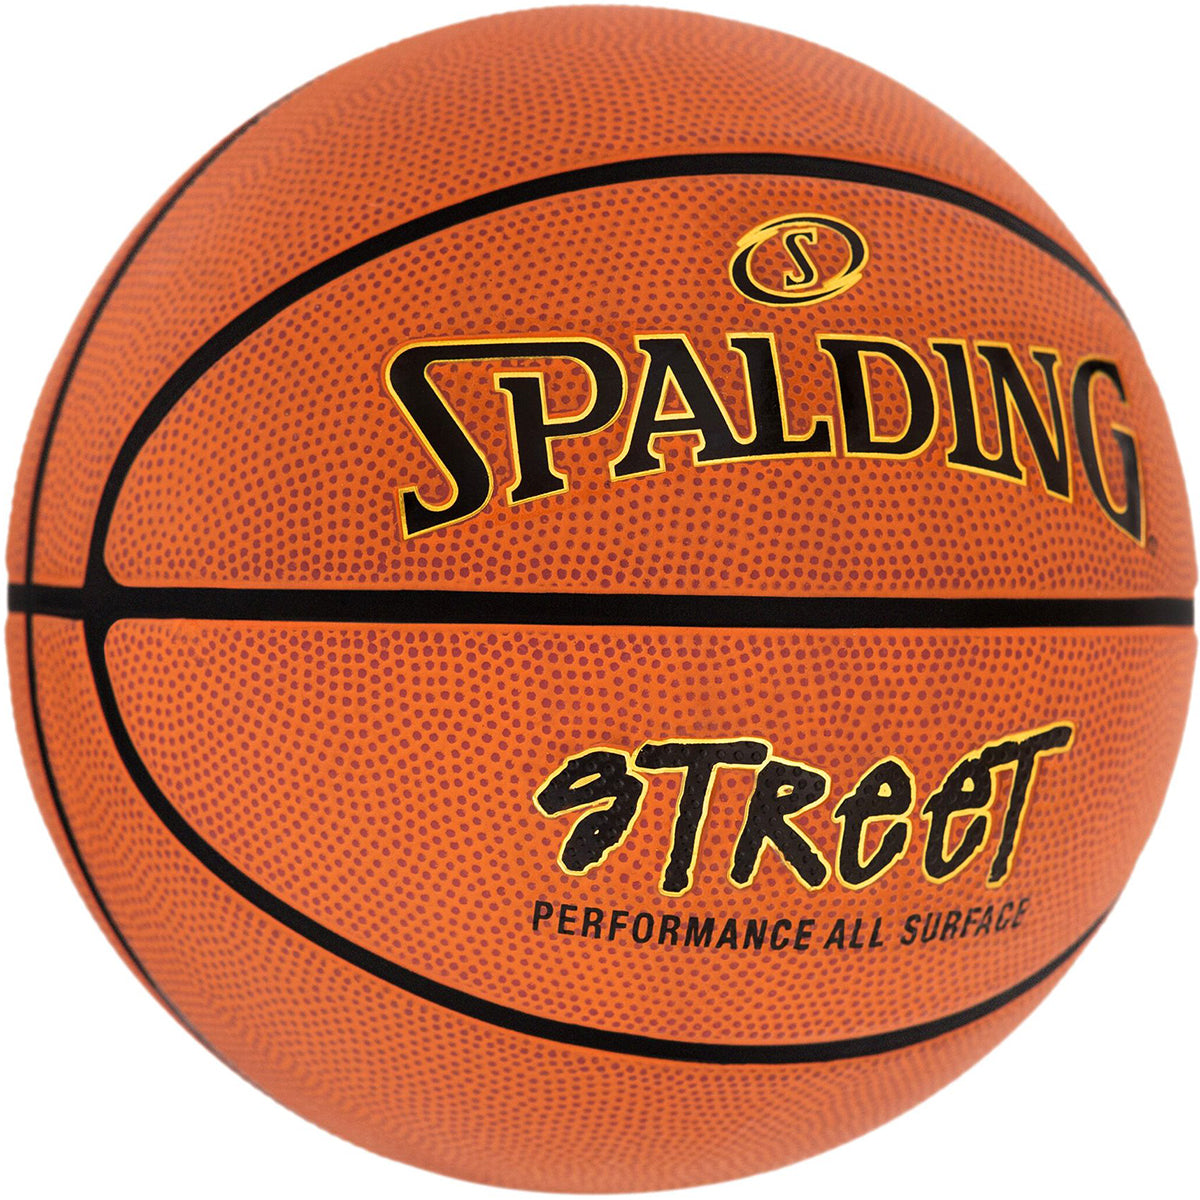 Spalding Street Outdoor Basketball - Orange Spalding